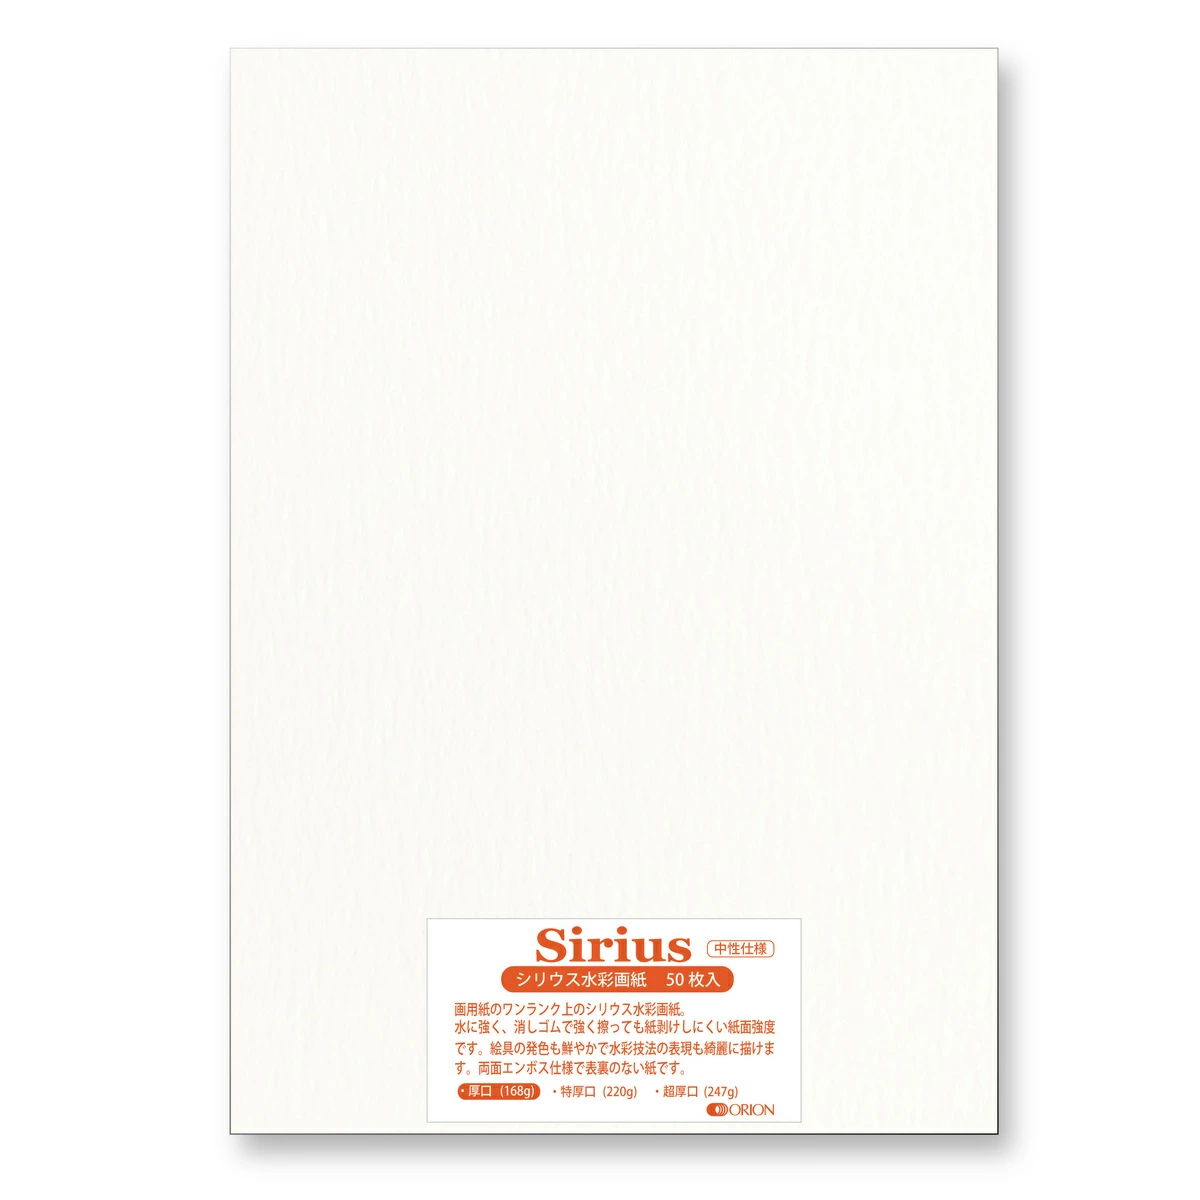 Buy Orion School Sketchbook F6 Size Sirius Watercolor Paper 168g